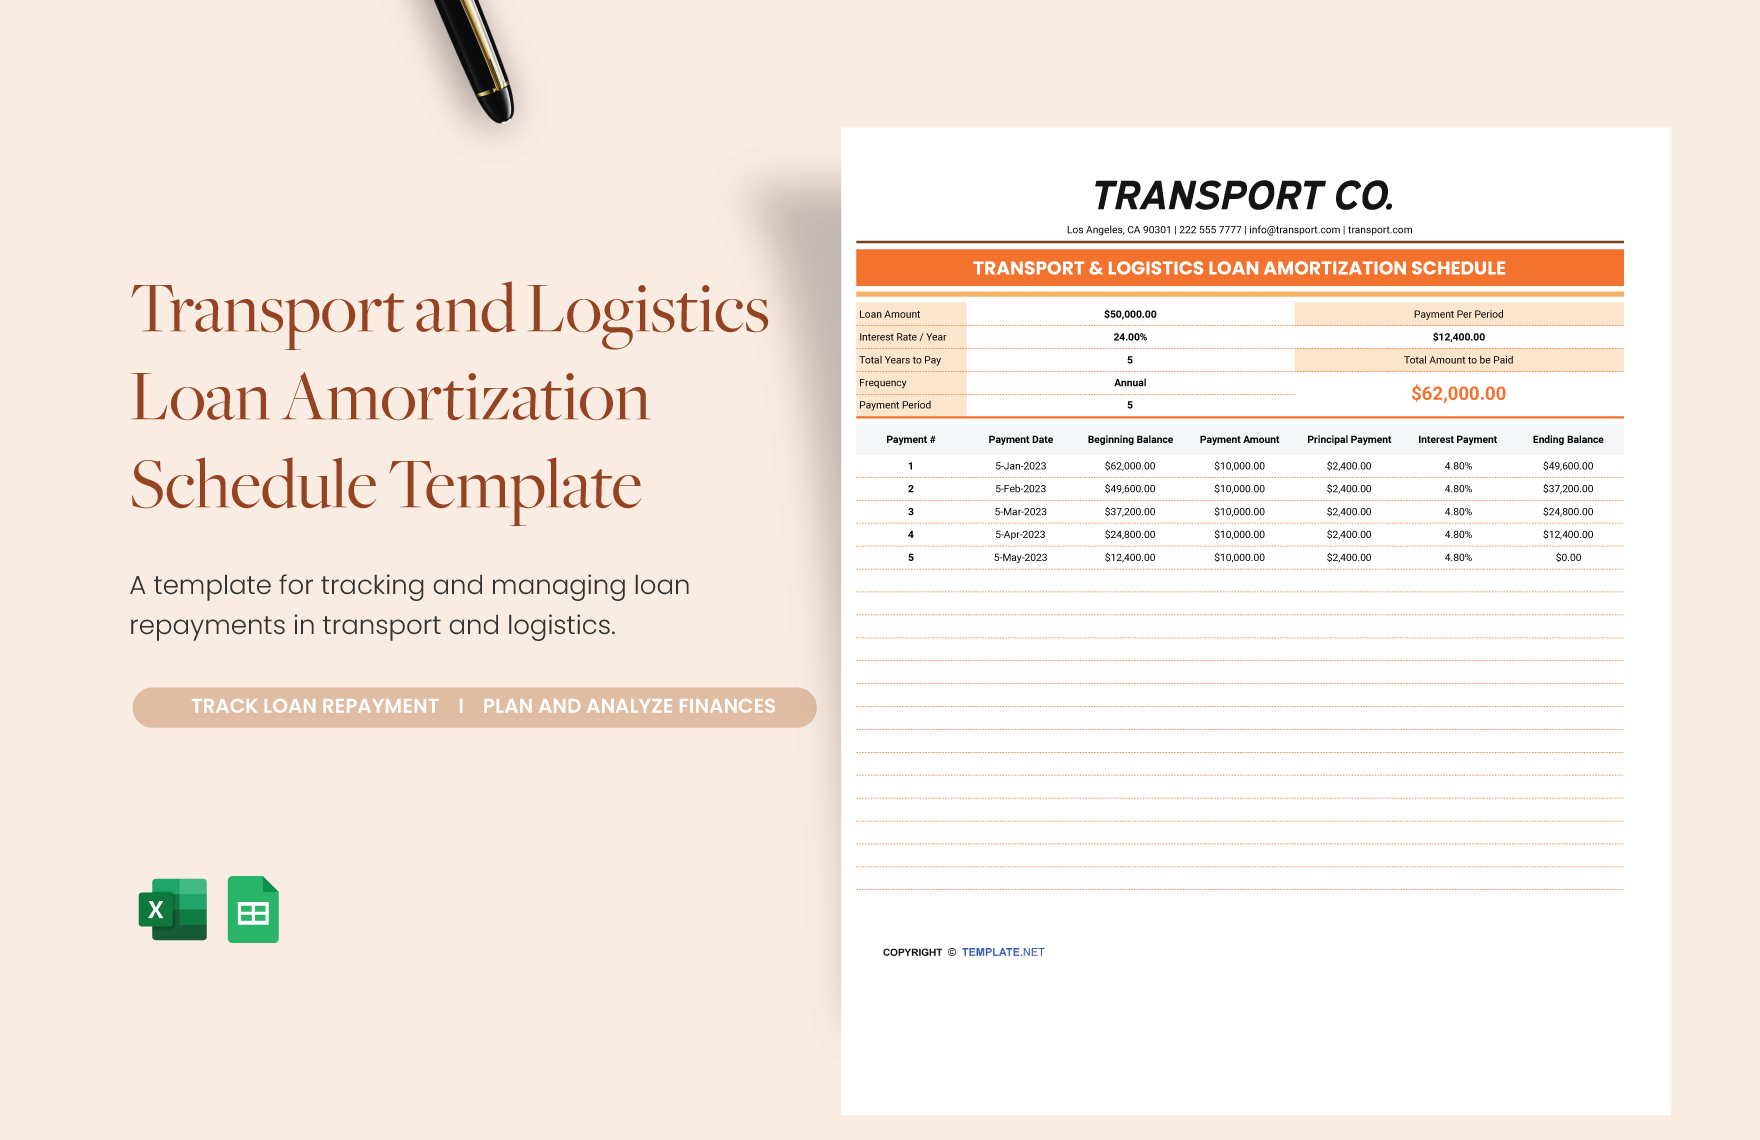 Transport and Logistics Loan Amortization Schedule Template